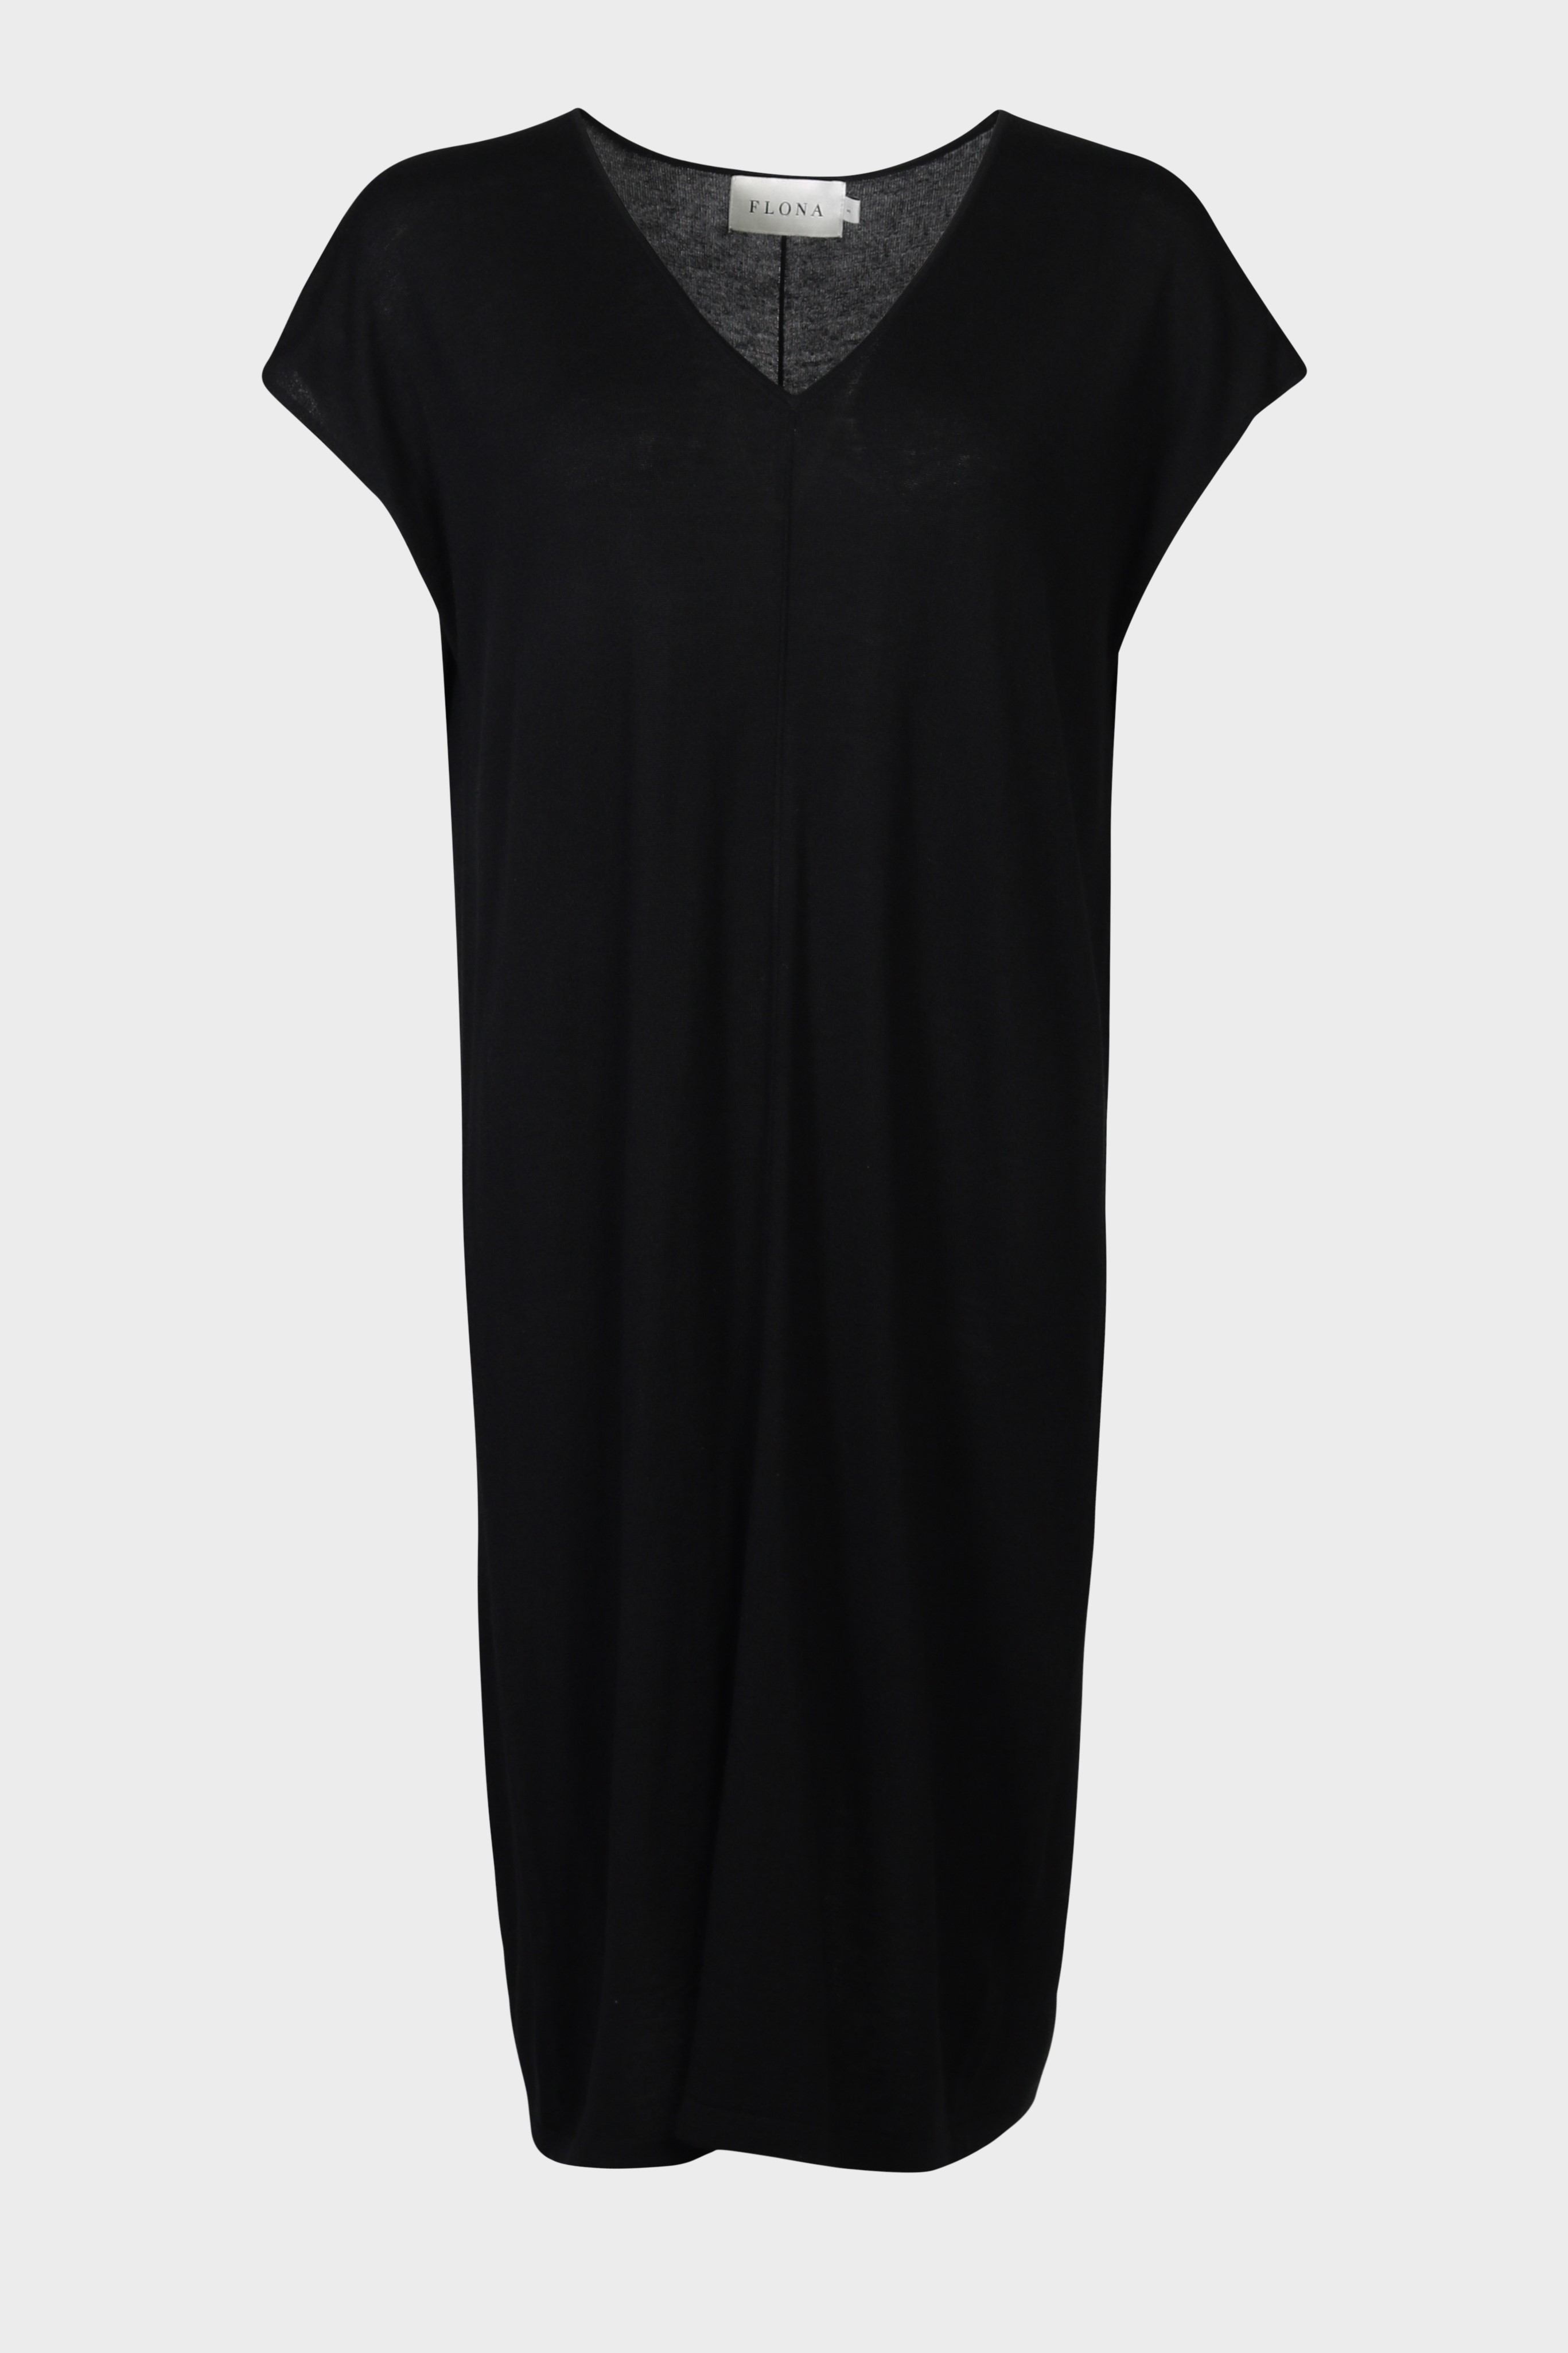 FLONA Cashmere/Silk Knit Dress in Black